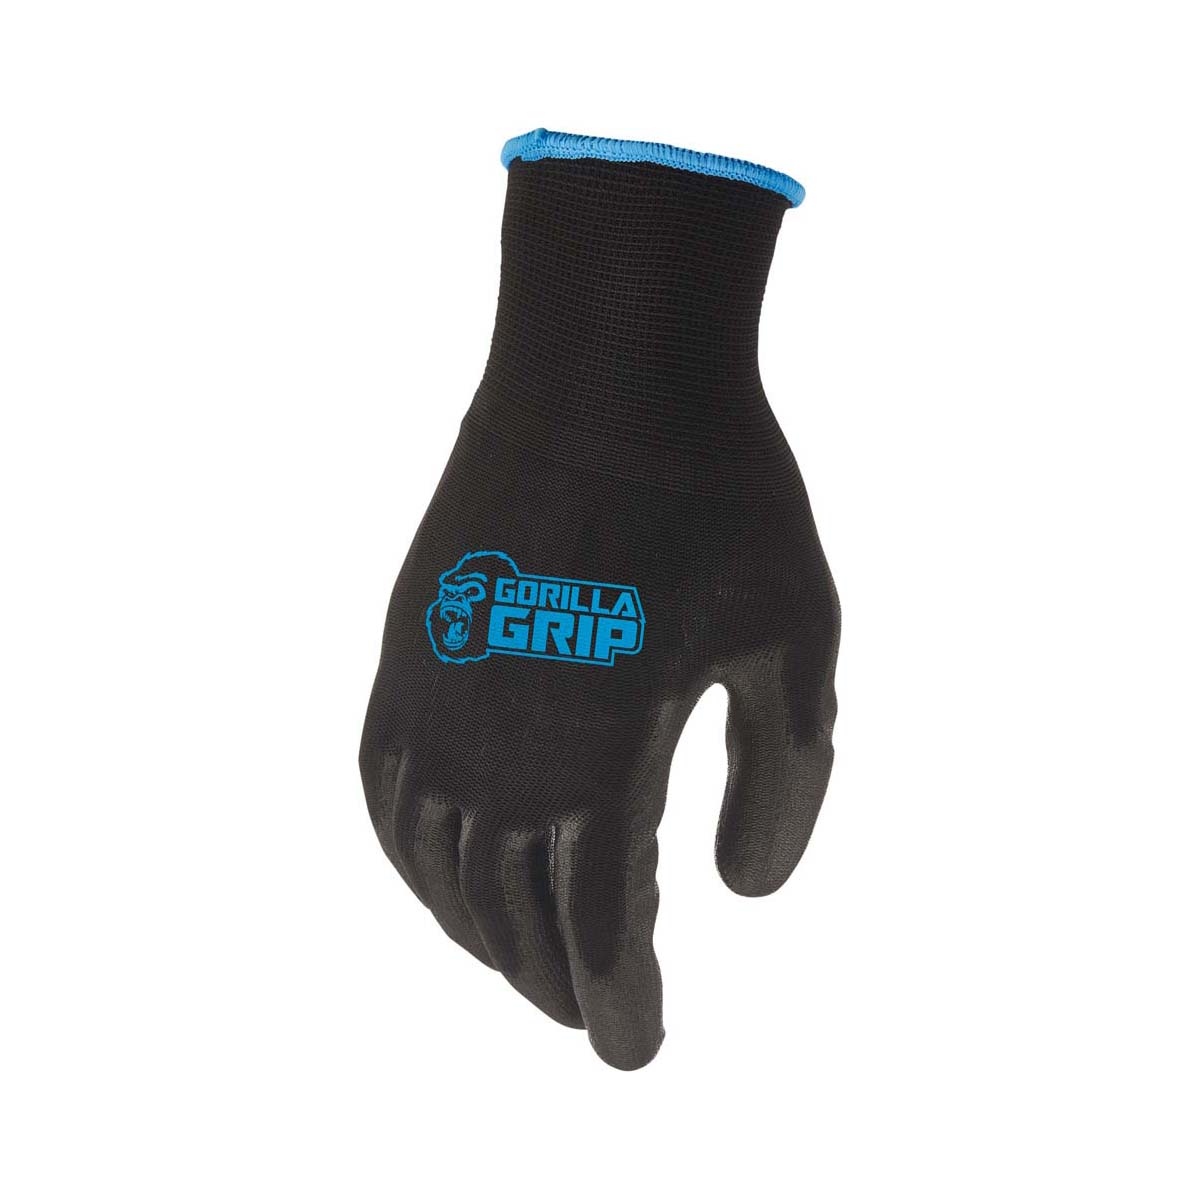 Gorilla Grip Original Fishing Glove XL